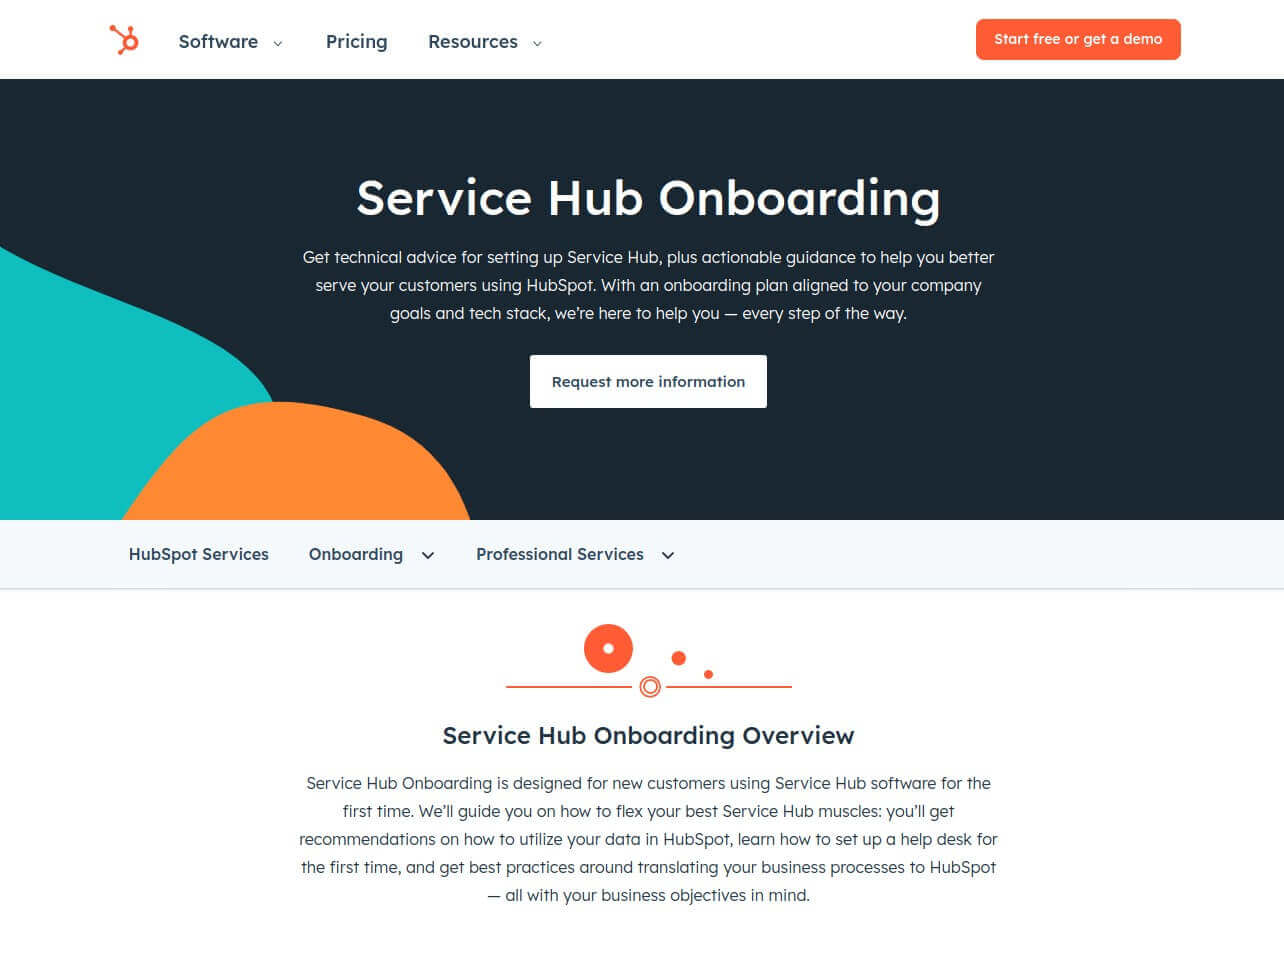 HubSpot Service Hub Onboarding